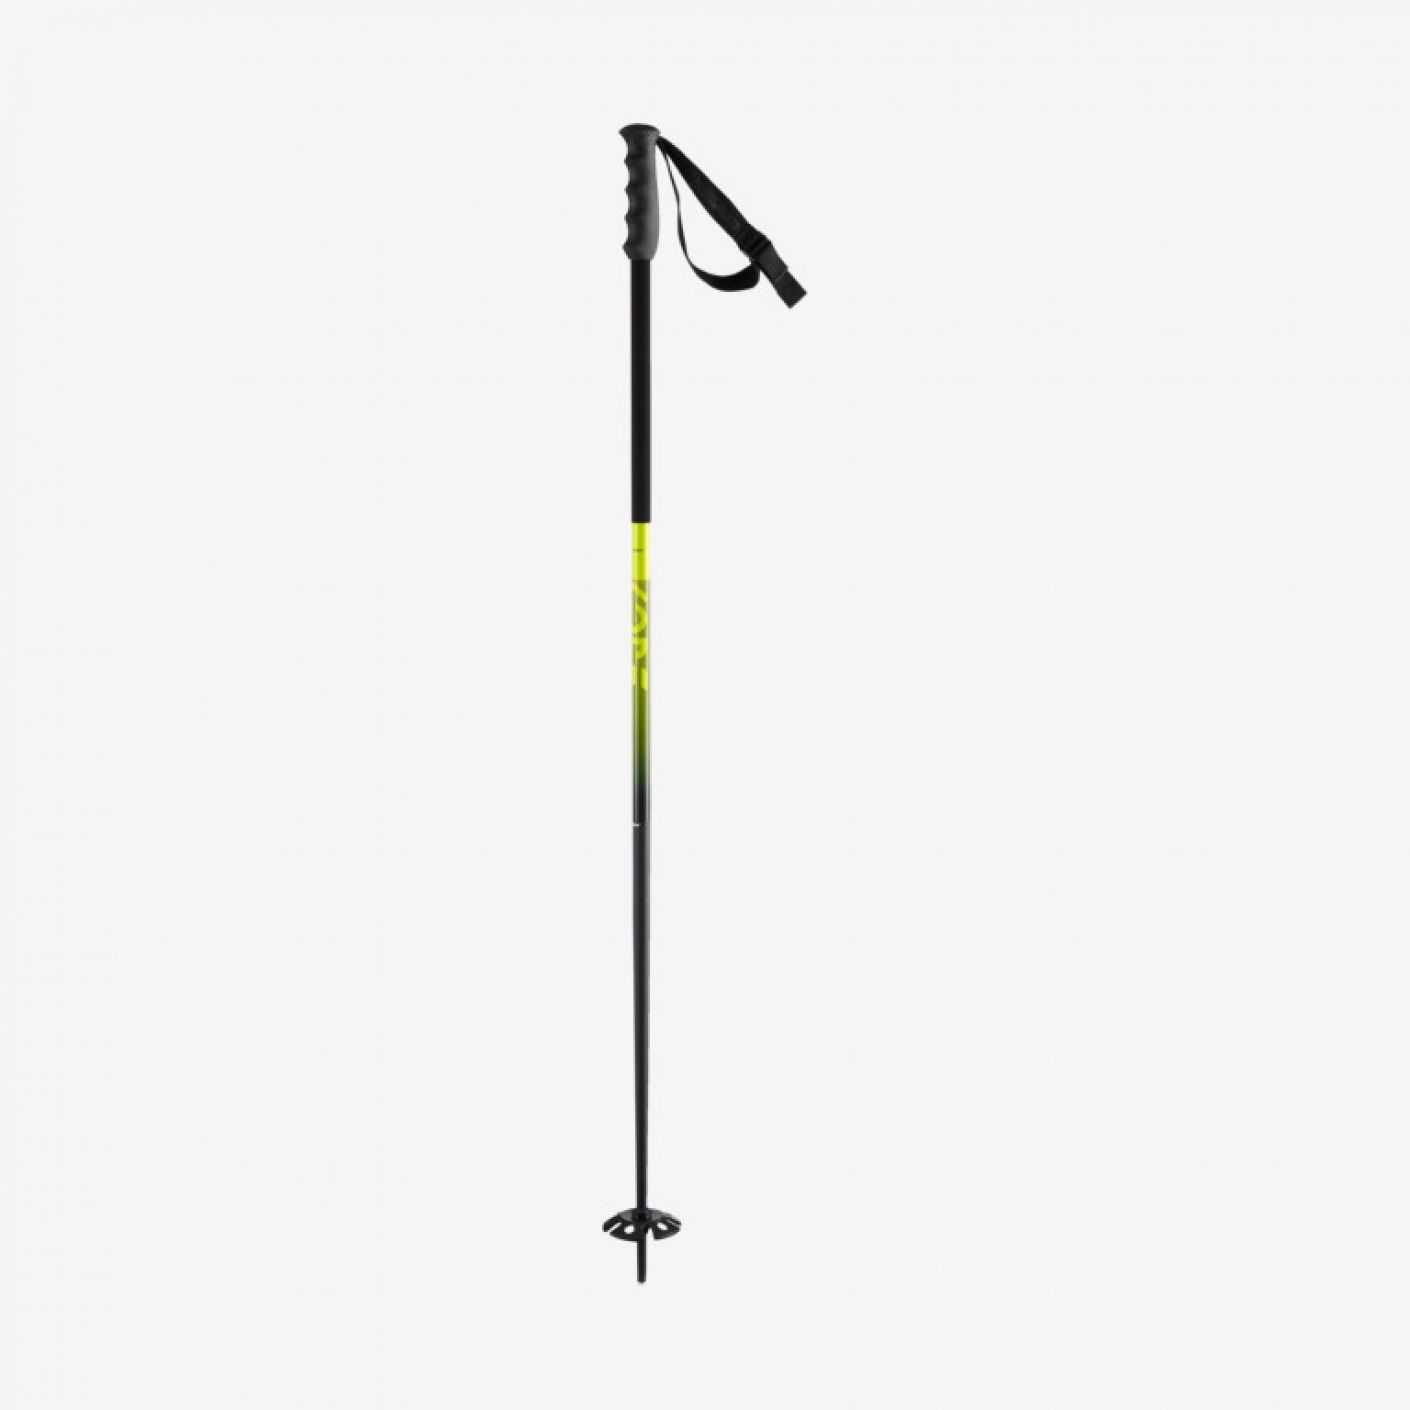 Head Bastoncini Kore Freeride Pole Black/Yellow